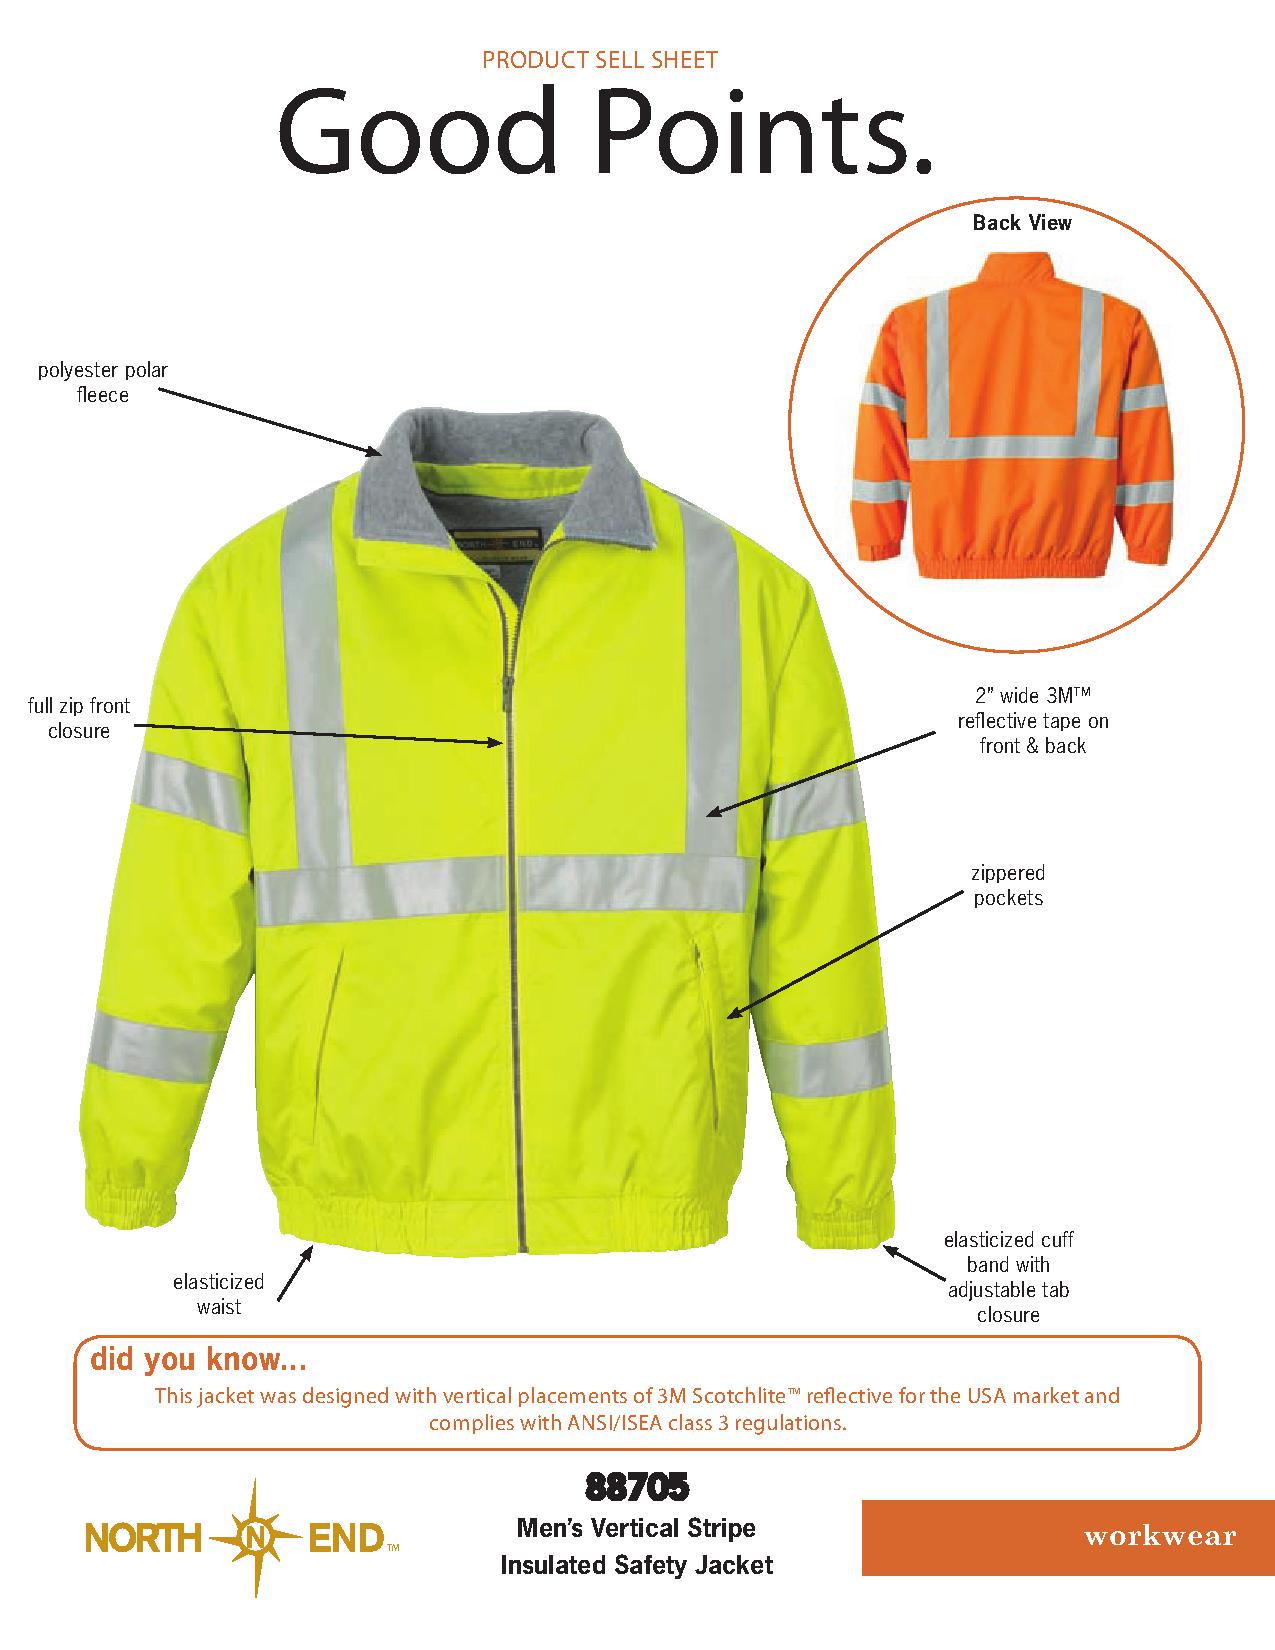 Ash City UTK 2 Warm.Logik 88705 - Men's Vertical Stripe Insulated Safety Jacket